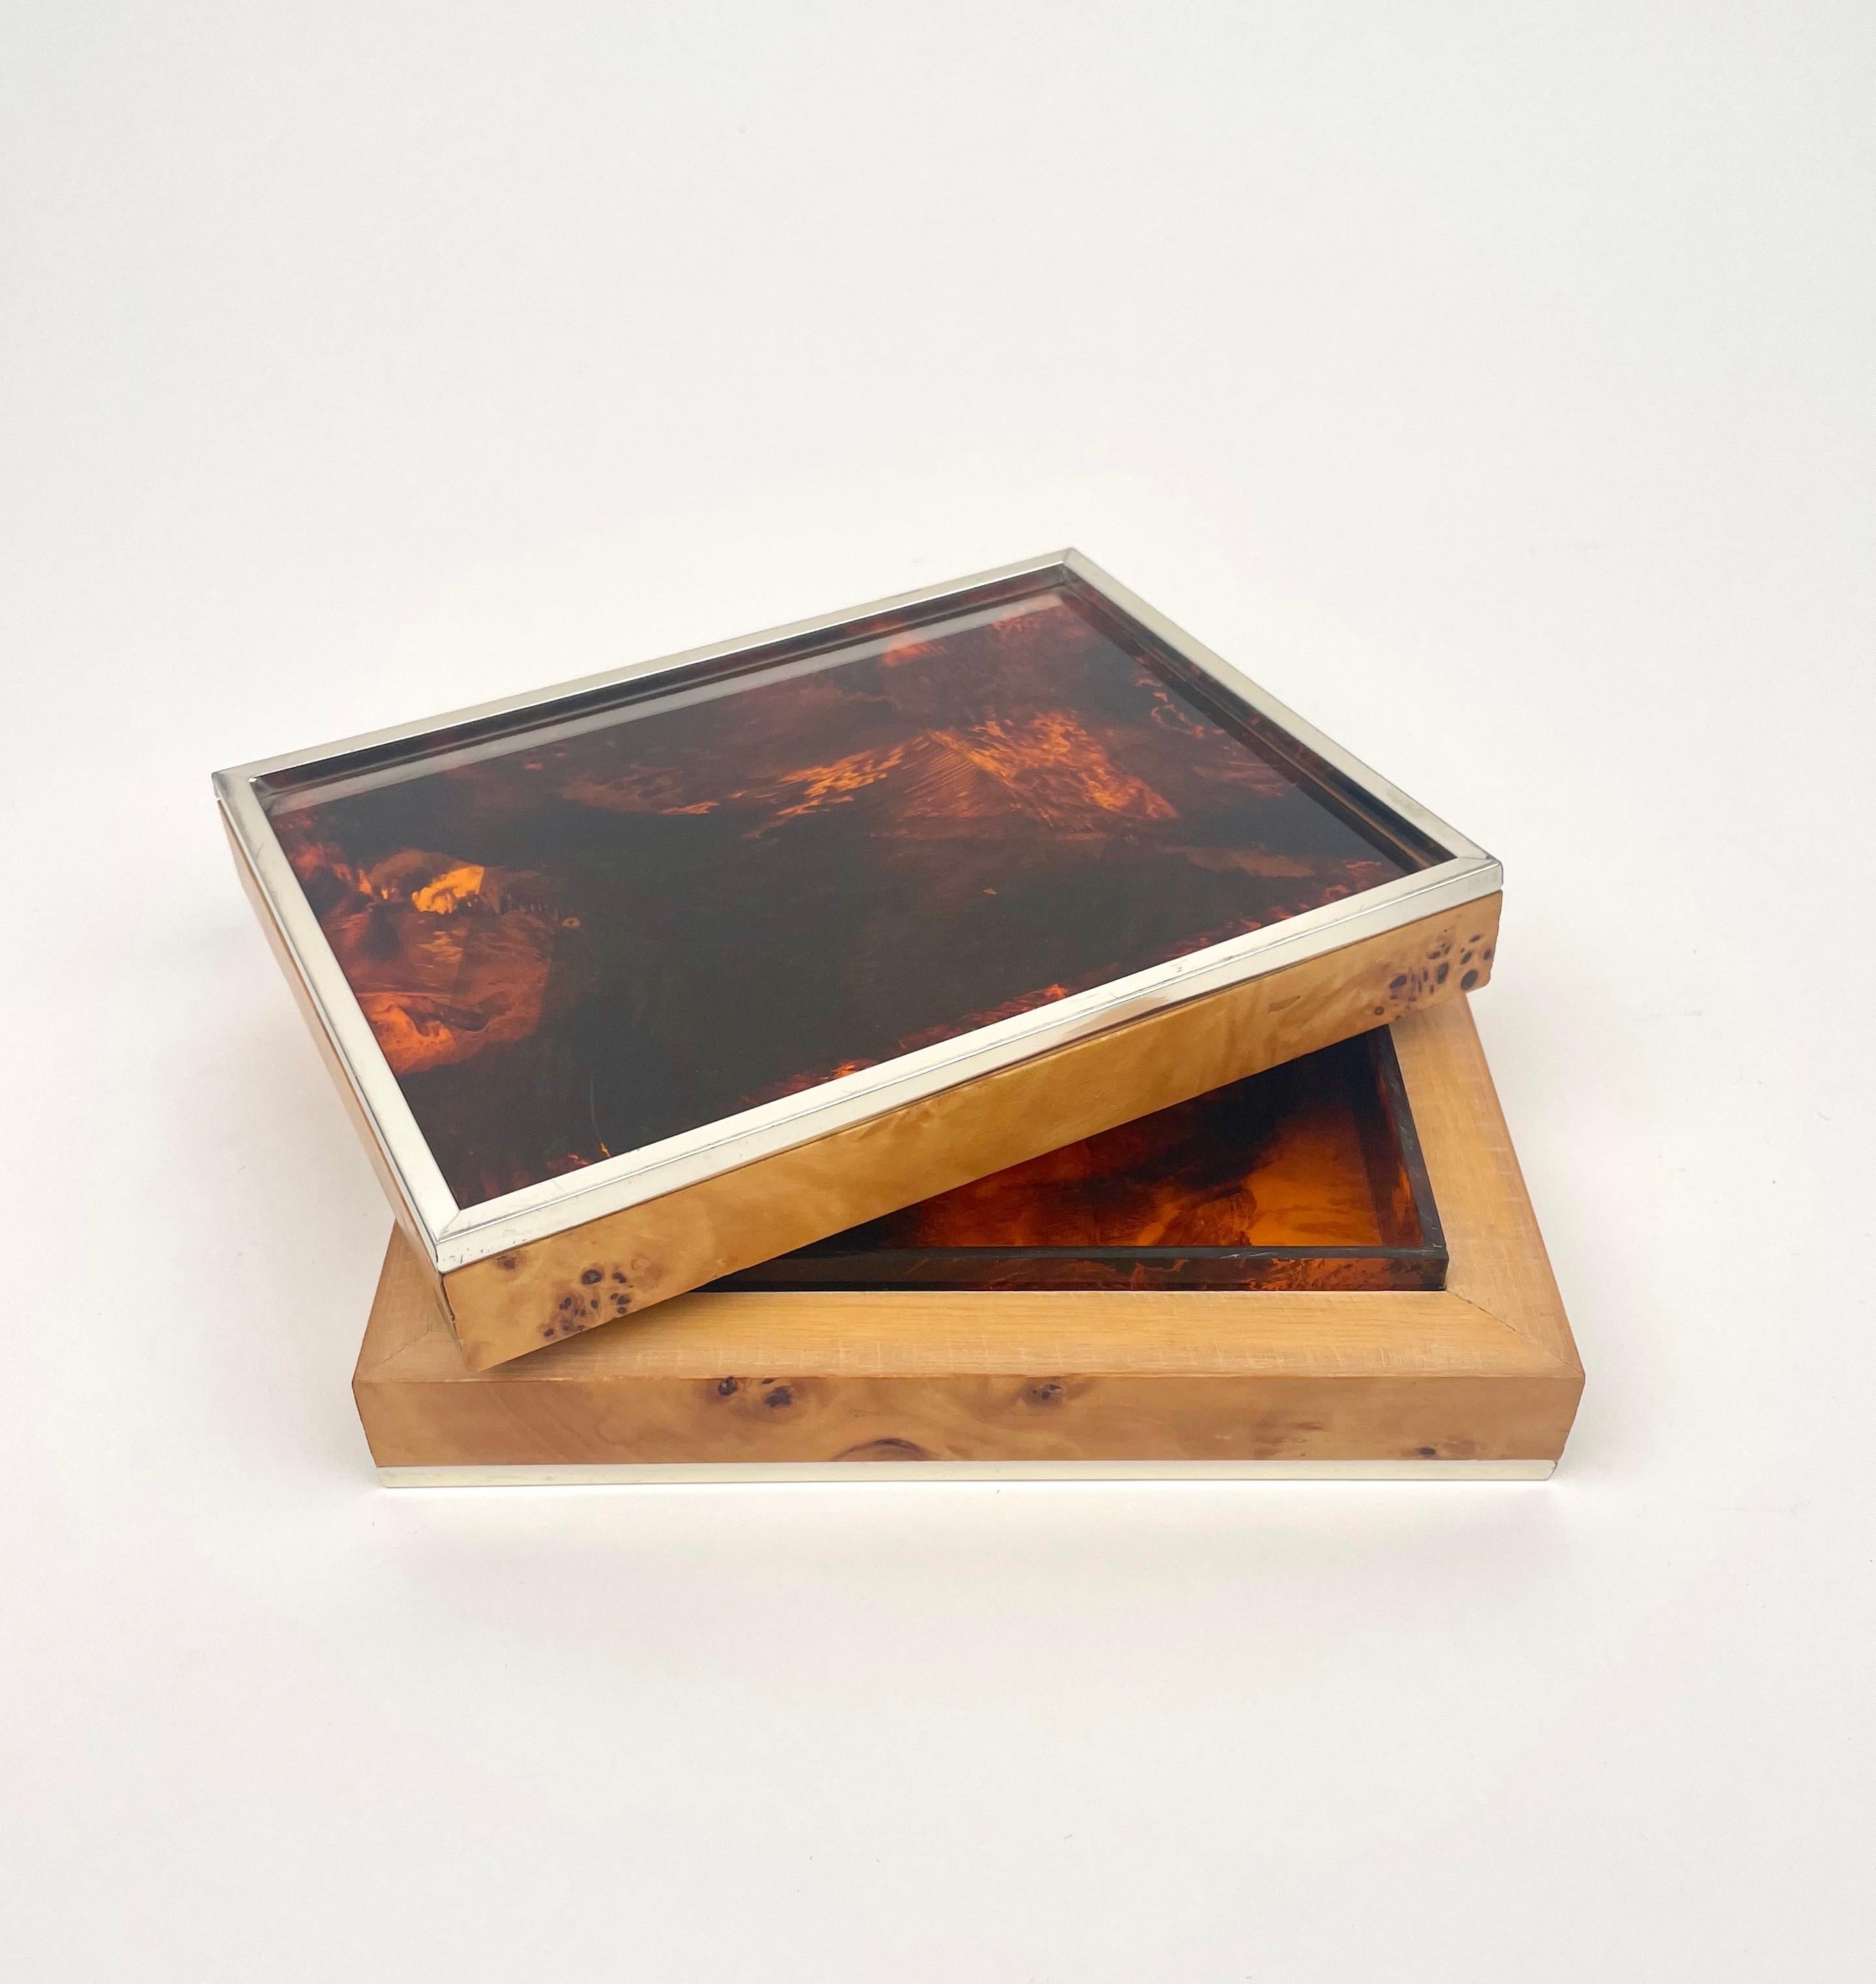 Burl Wood & Tortoiseshell Effect Lucite Box, Italy, 1970s For Sale 4